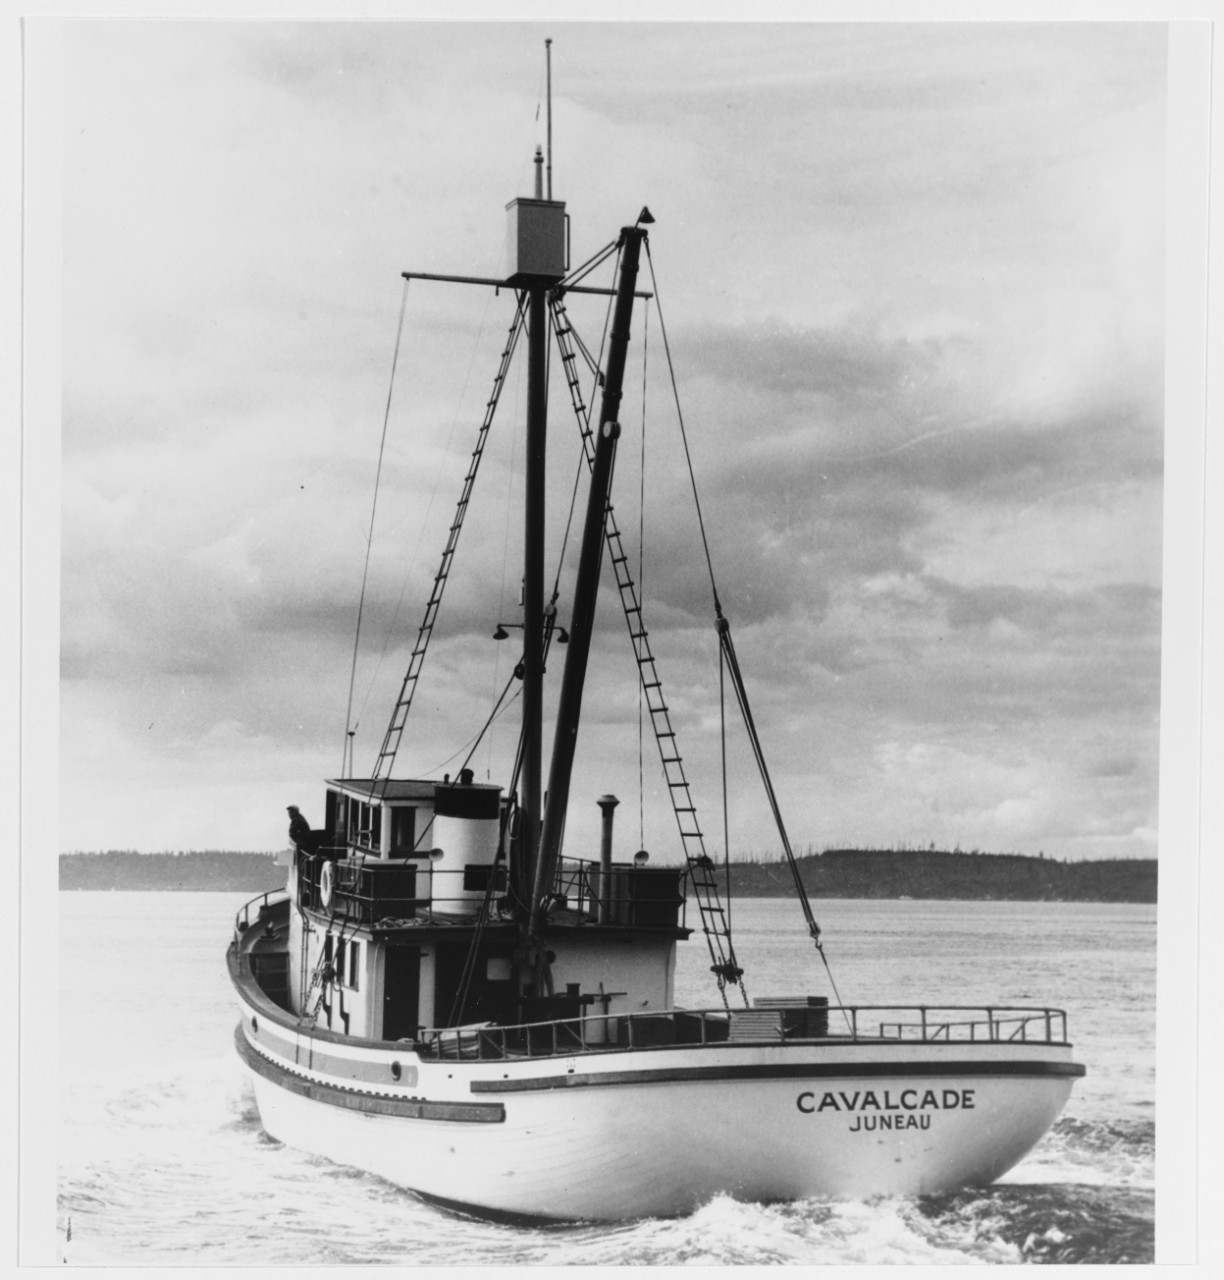 CAVALCADE (U.S. fishing boat, 1940)